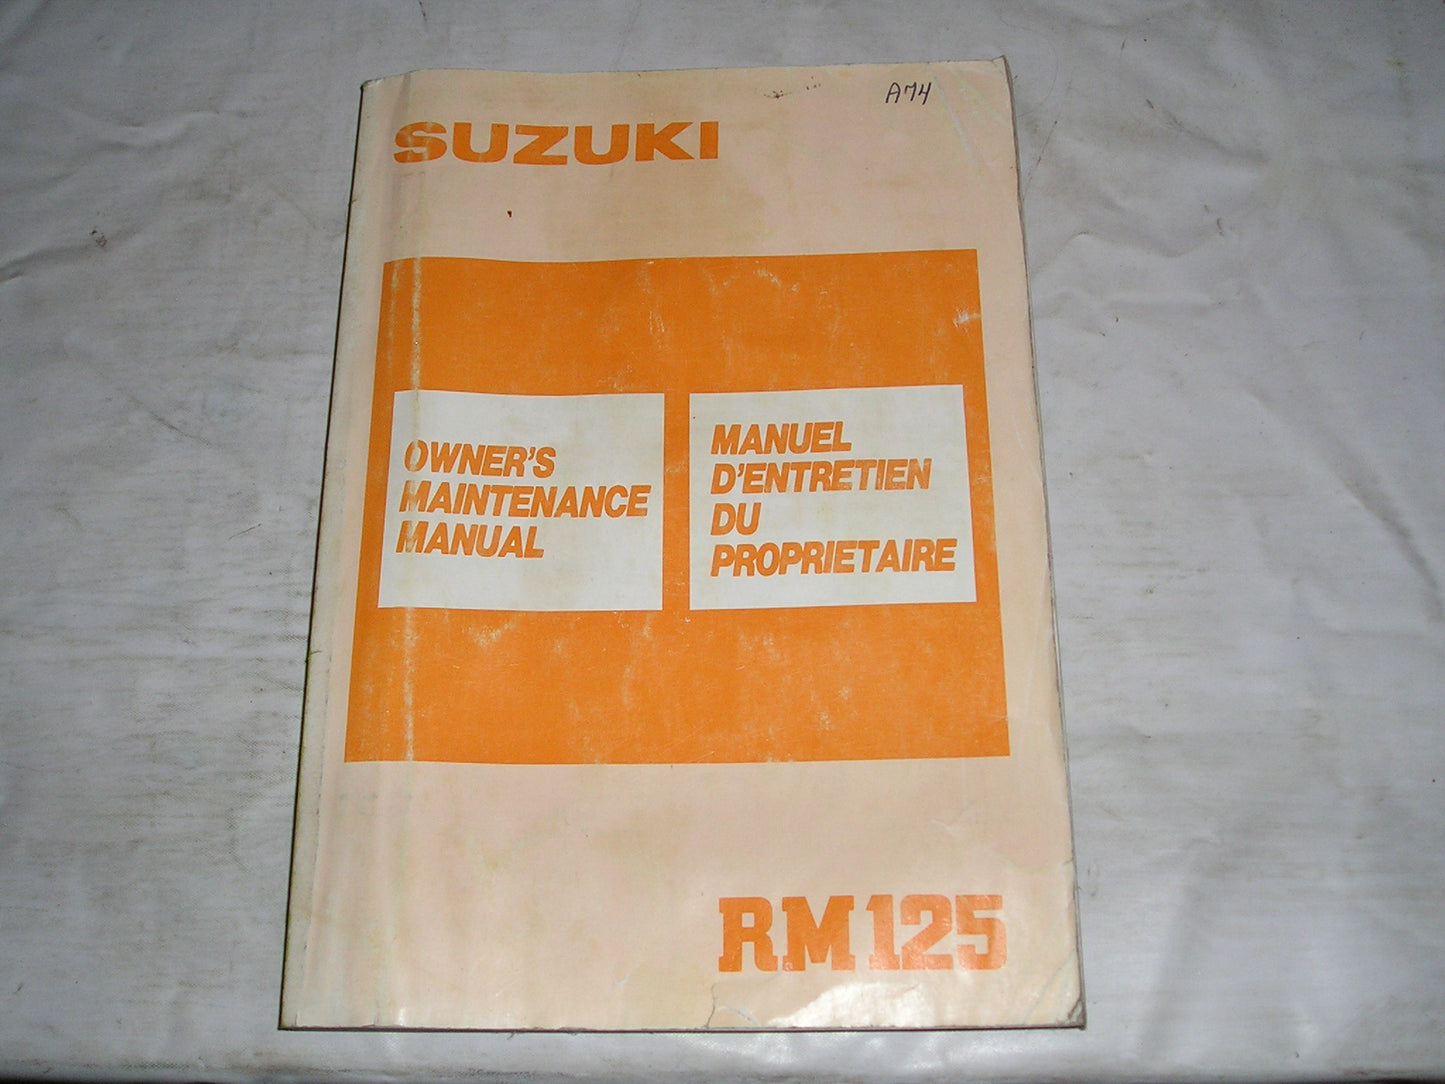 SUZUKI RM125 K  1989  Owner's Maintenance Manual  99011-27C50-01B  #A74